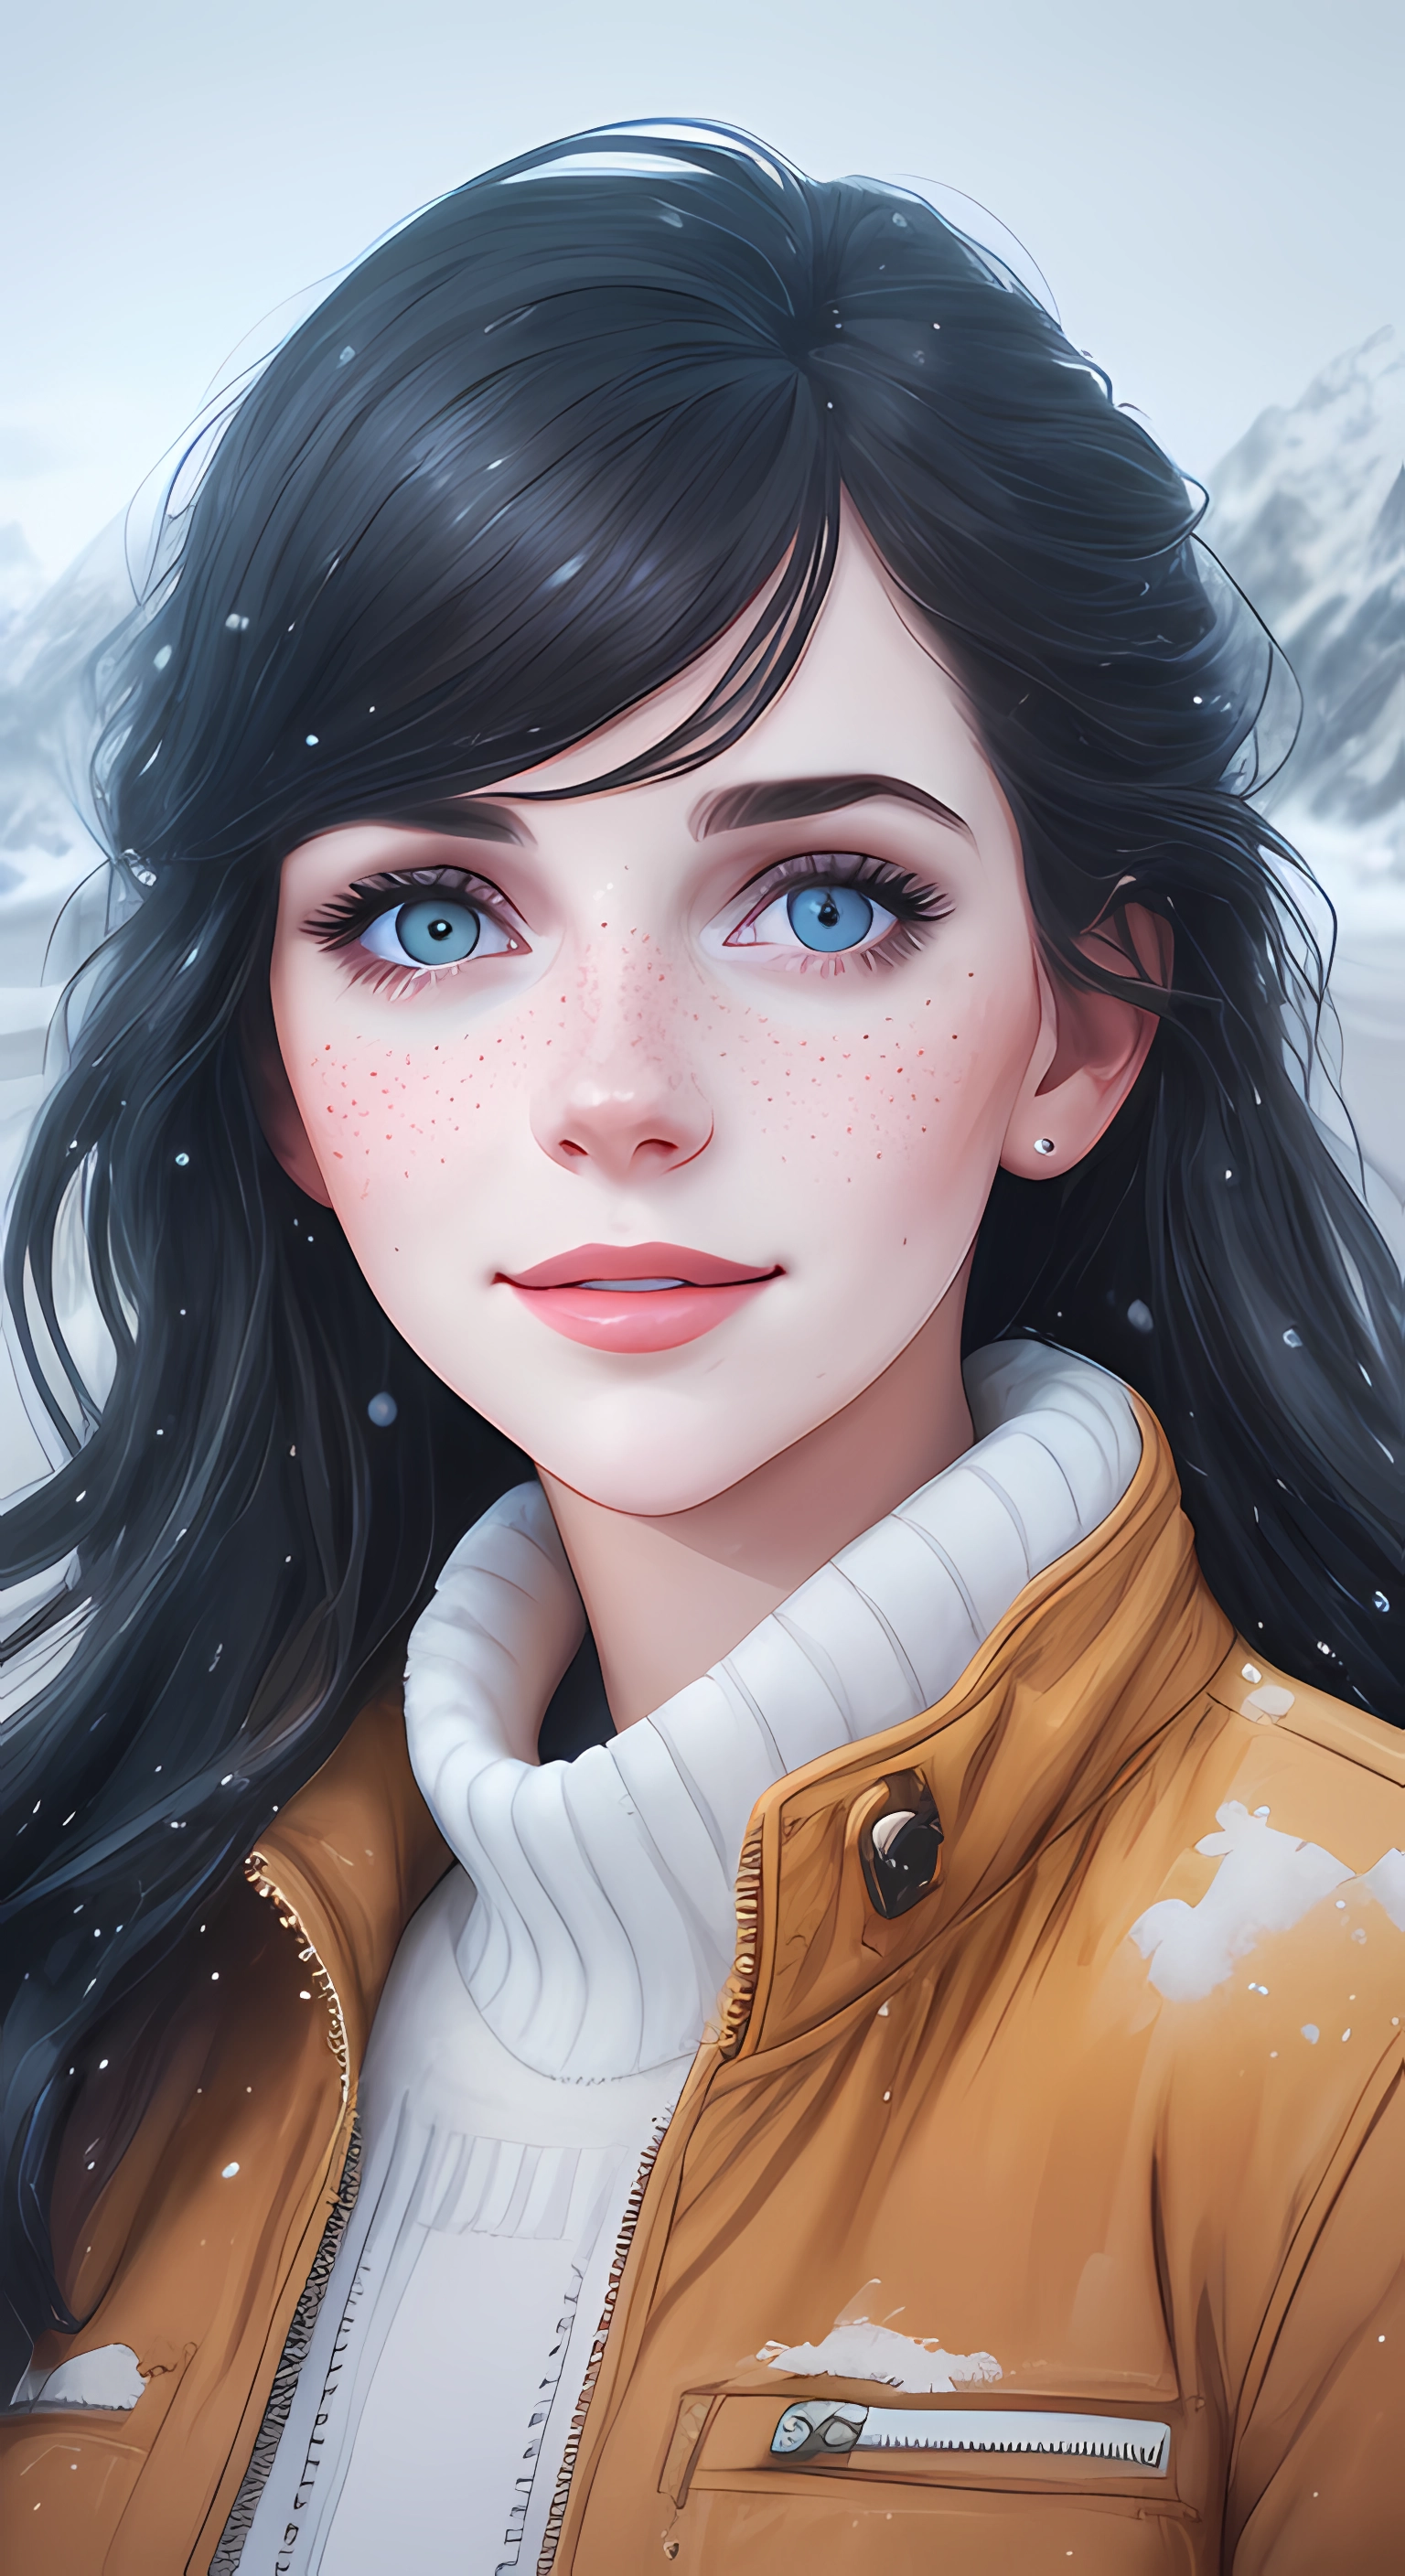 General 1536x2816 AI art freckles jacket sweater long hair black hair fantasy girl blue eyes smiling digital art artwork snowing mountains snow portrait display